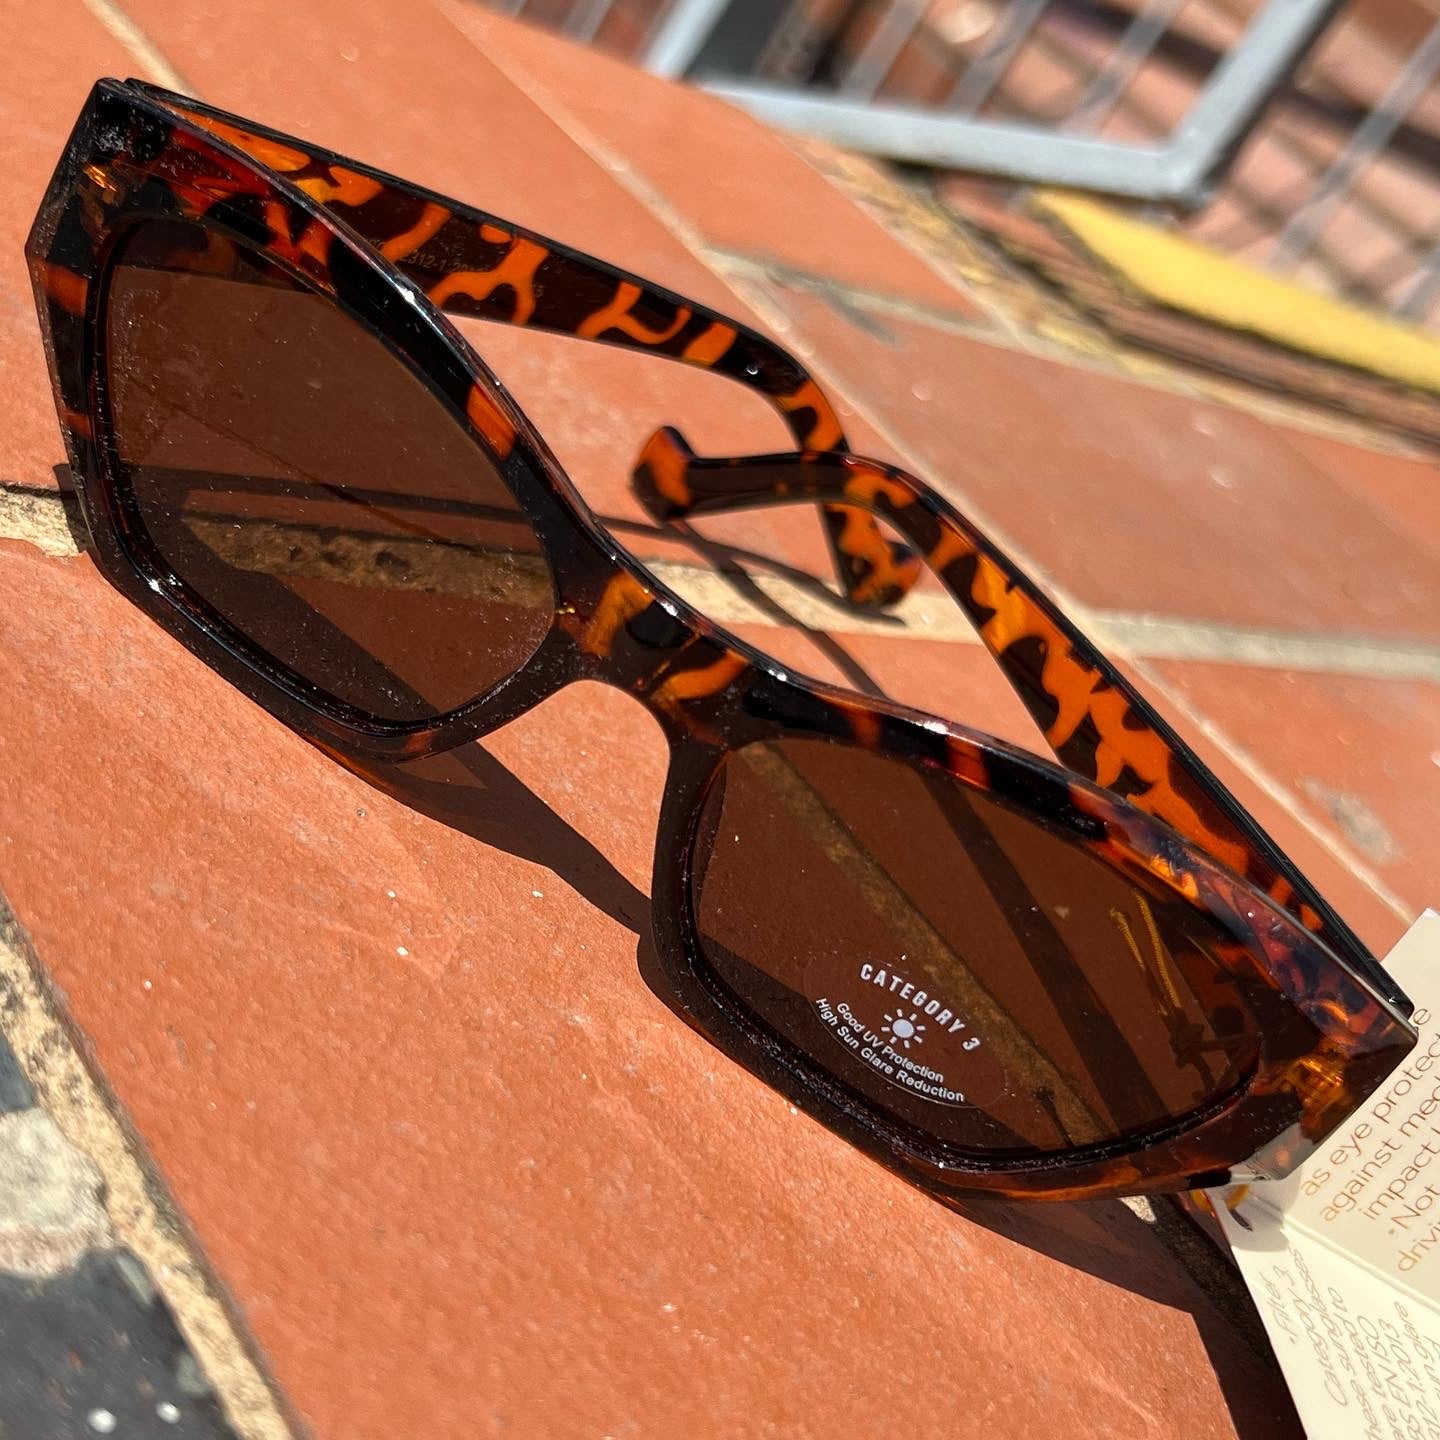 Harlowe Limited Edition Sunglasses